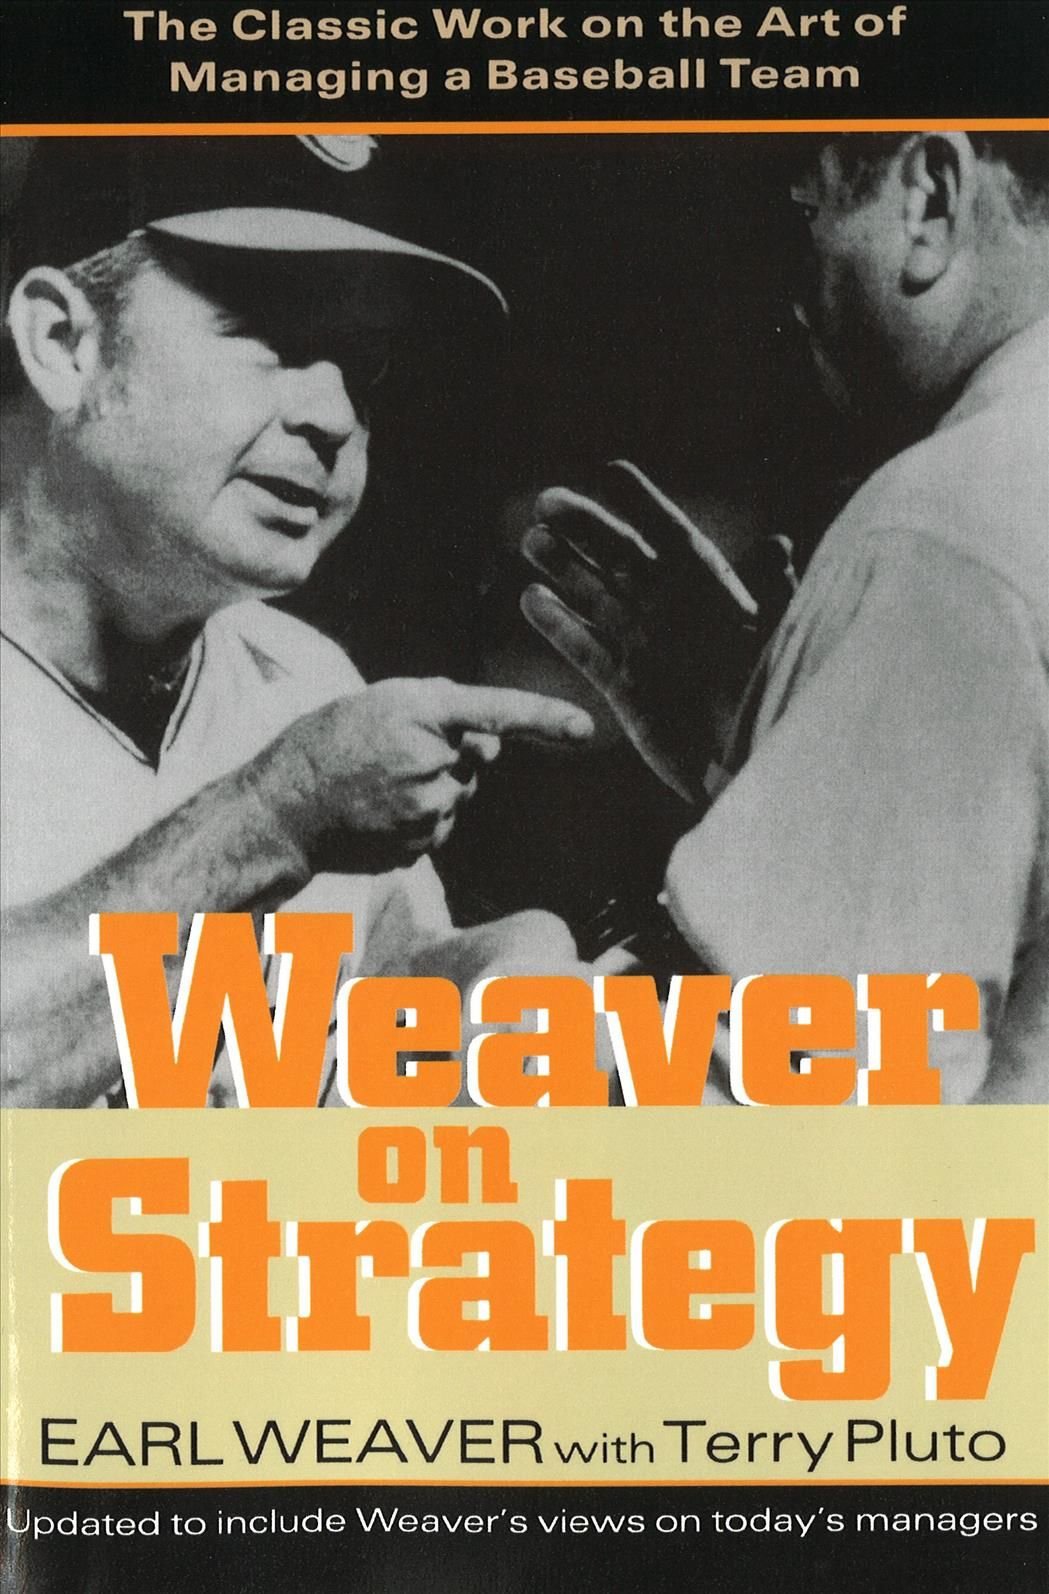 Weaver on Strategy